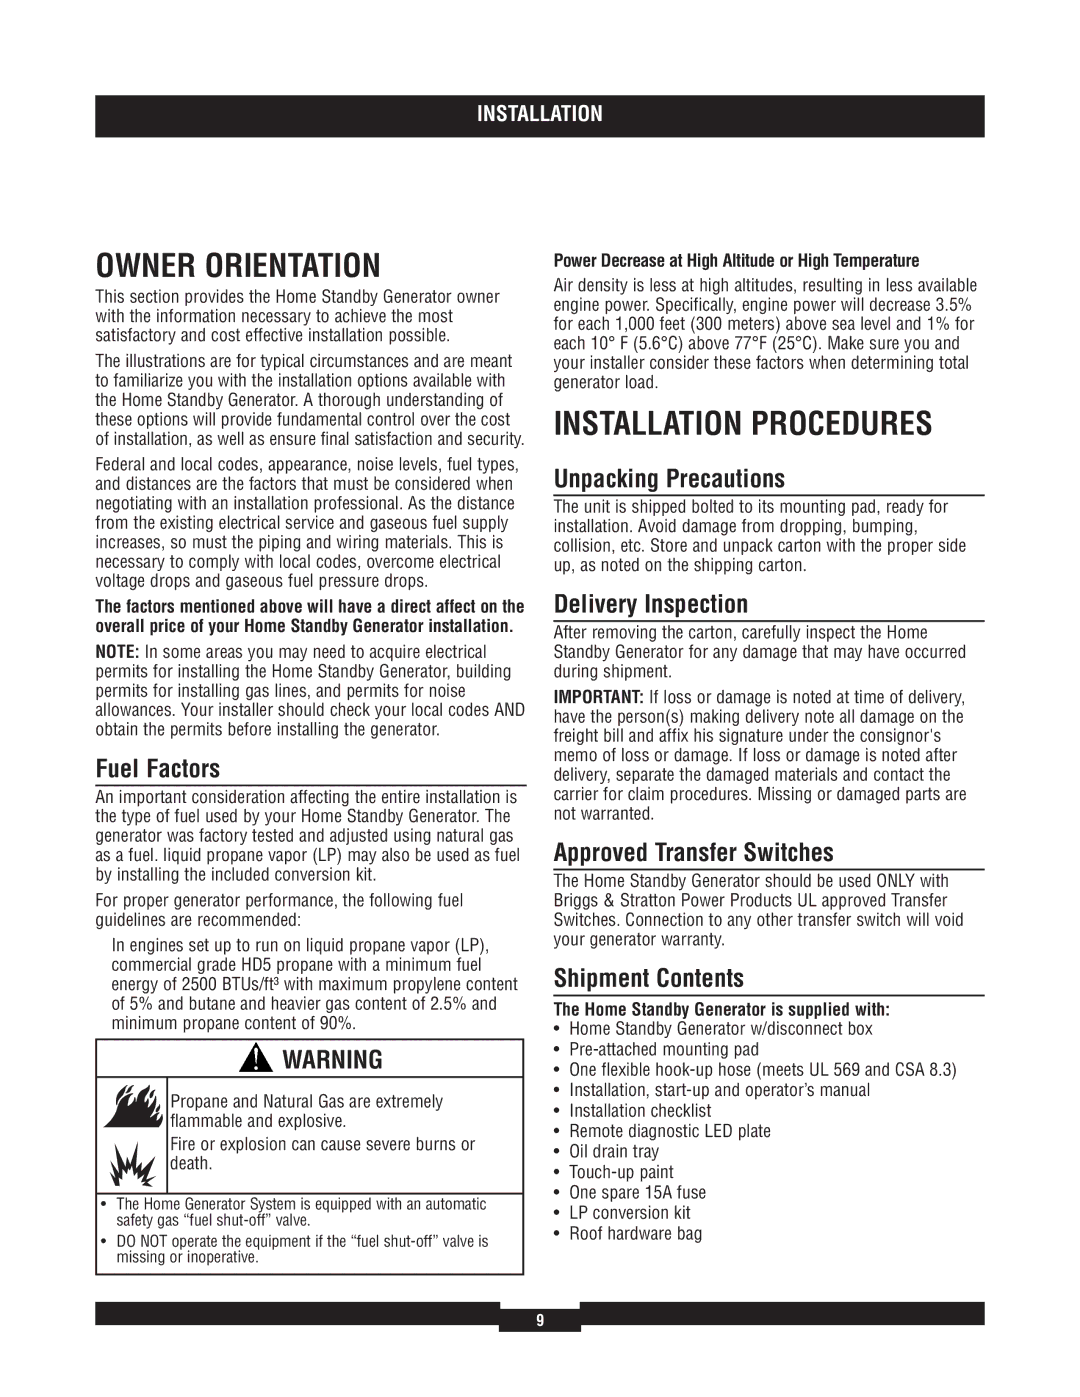 Briggs & Stratton 040220A manual Owner Orientation, Installation Procedures 